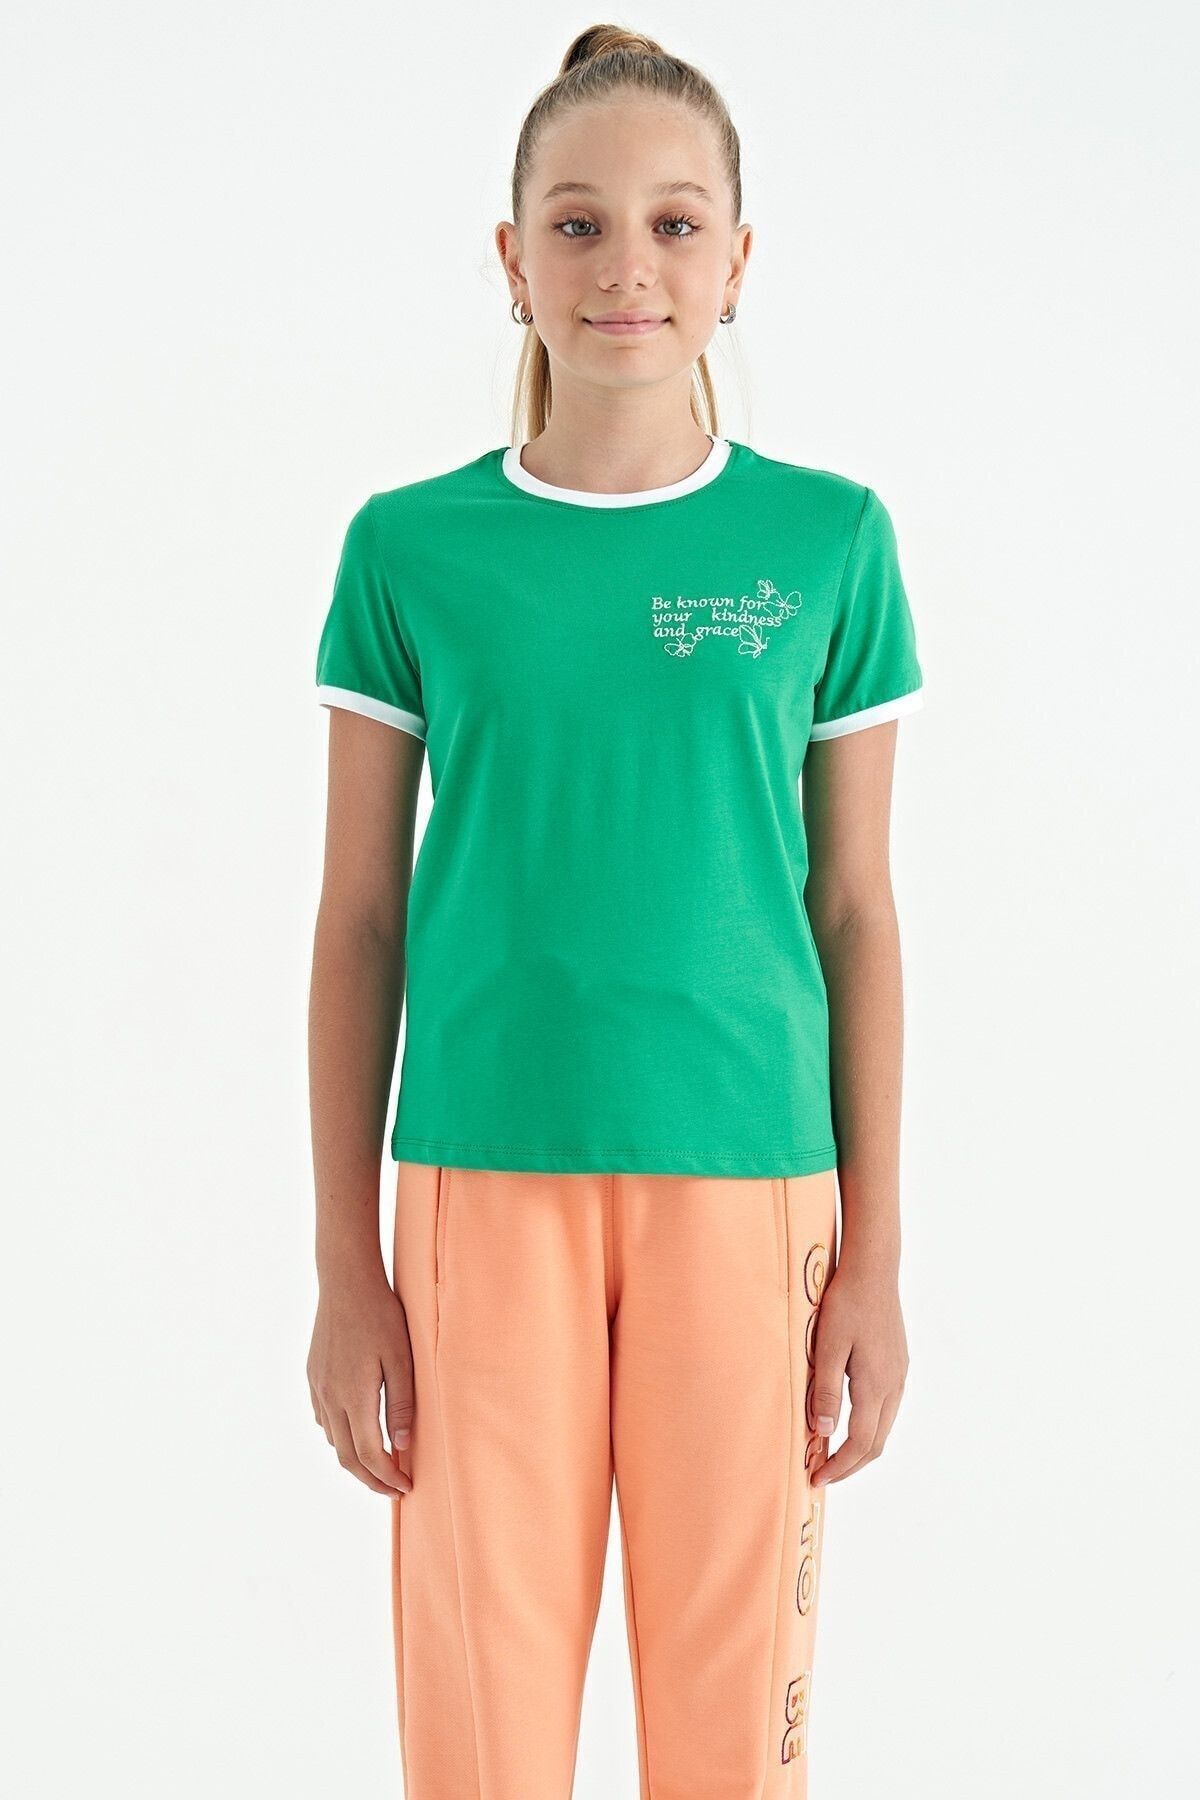 TOMMY LIFE Yeşil Minimal Yazı Baskılı O Yaka Rahat Form Kısa Kollu Kız Çocuk T-Shirt - 75110